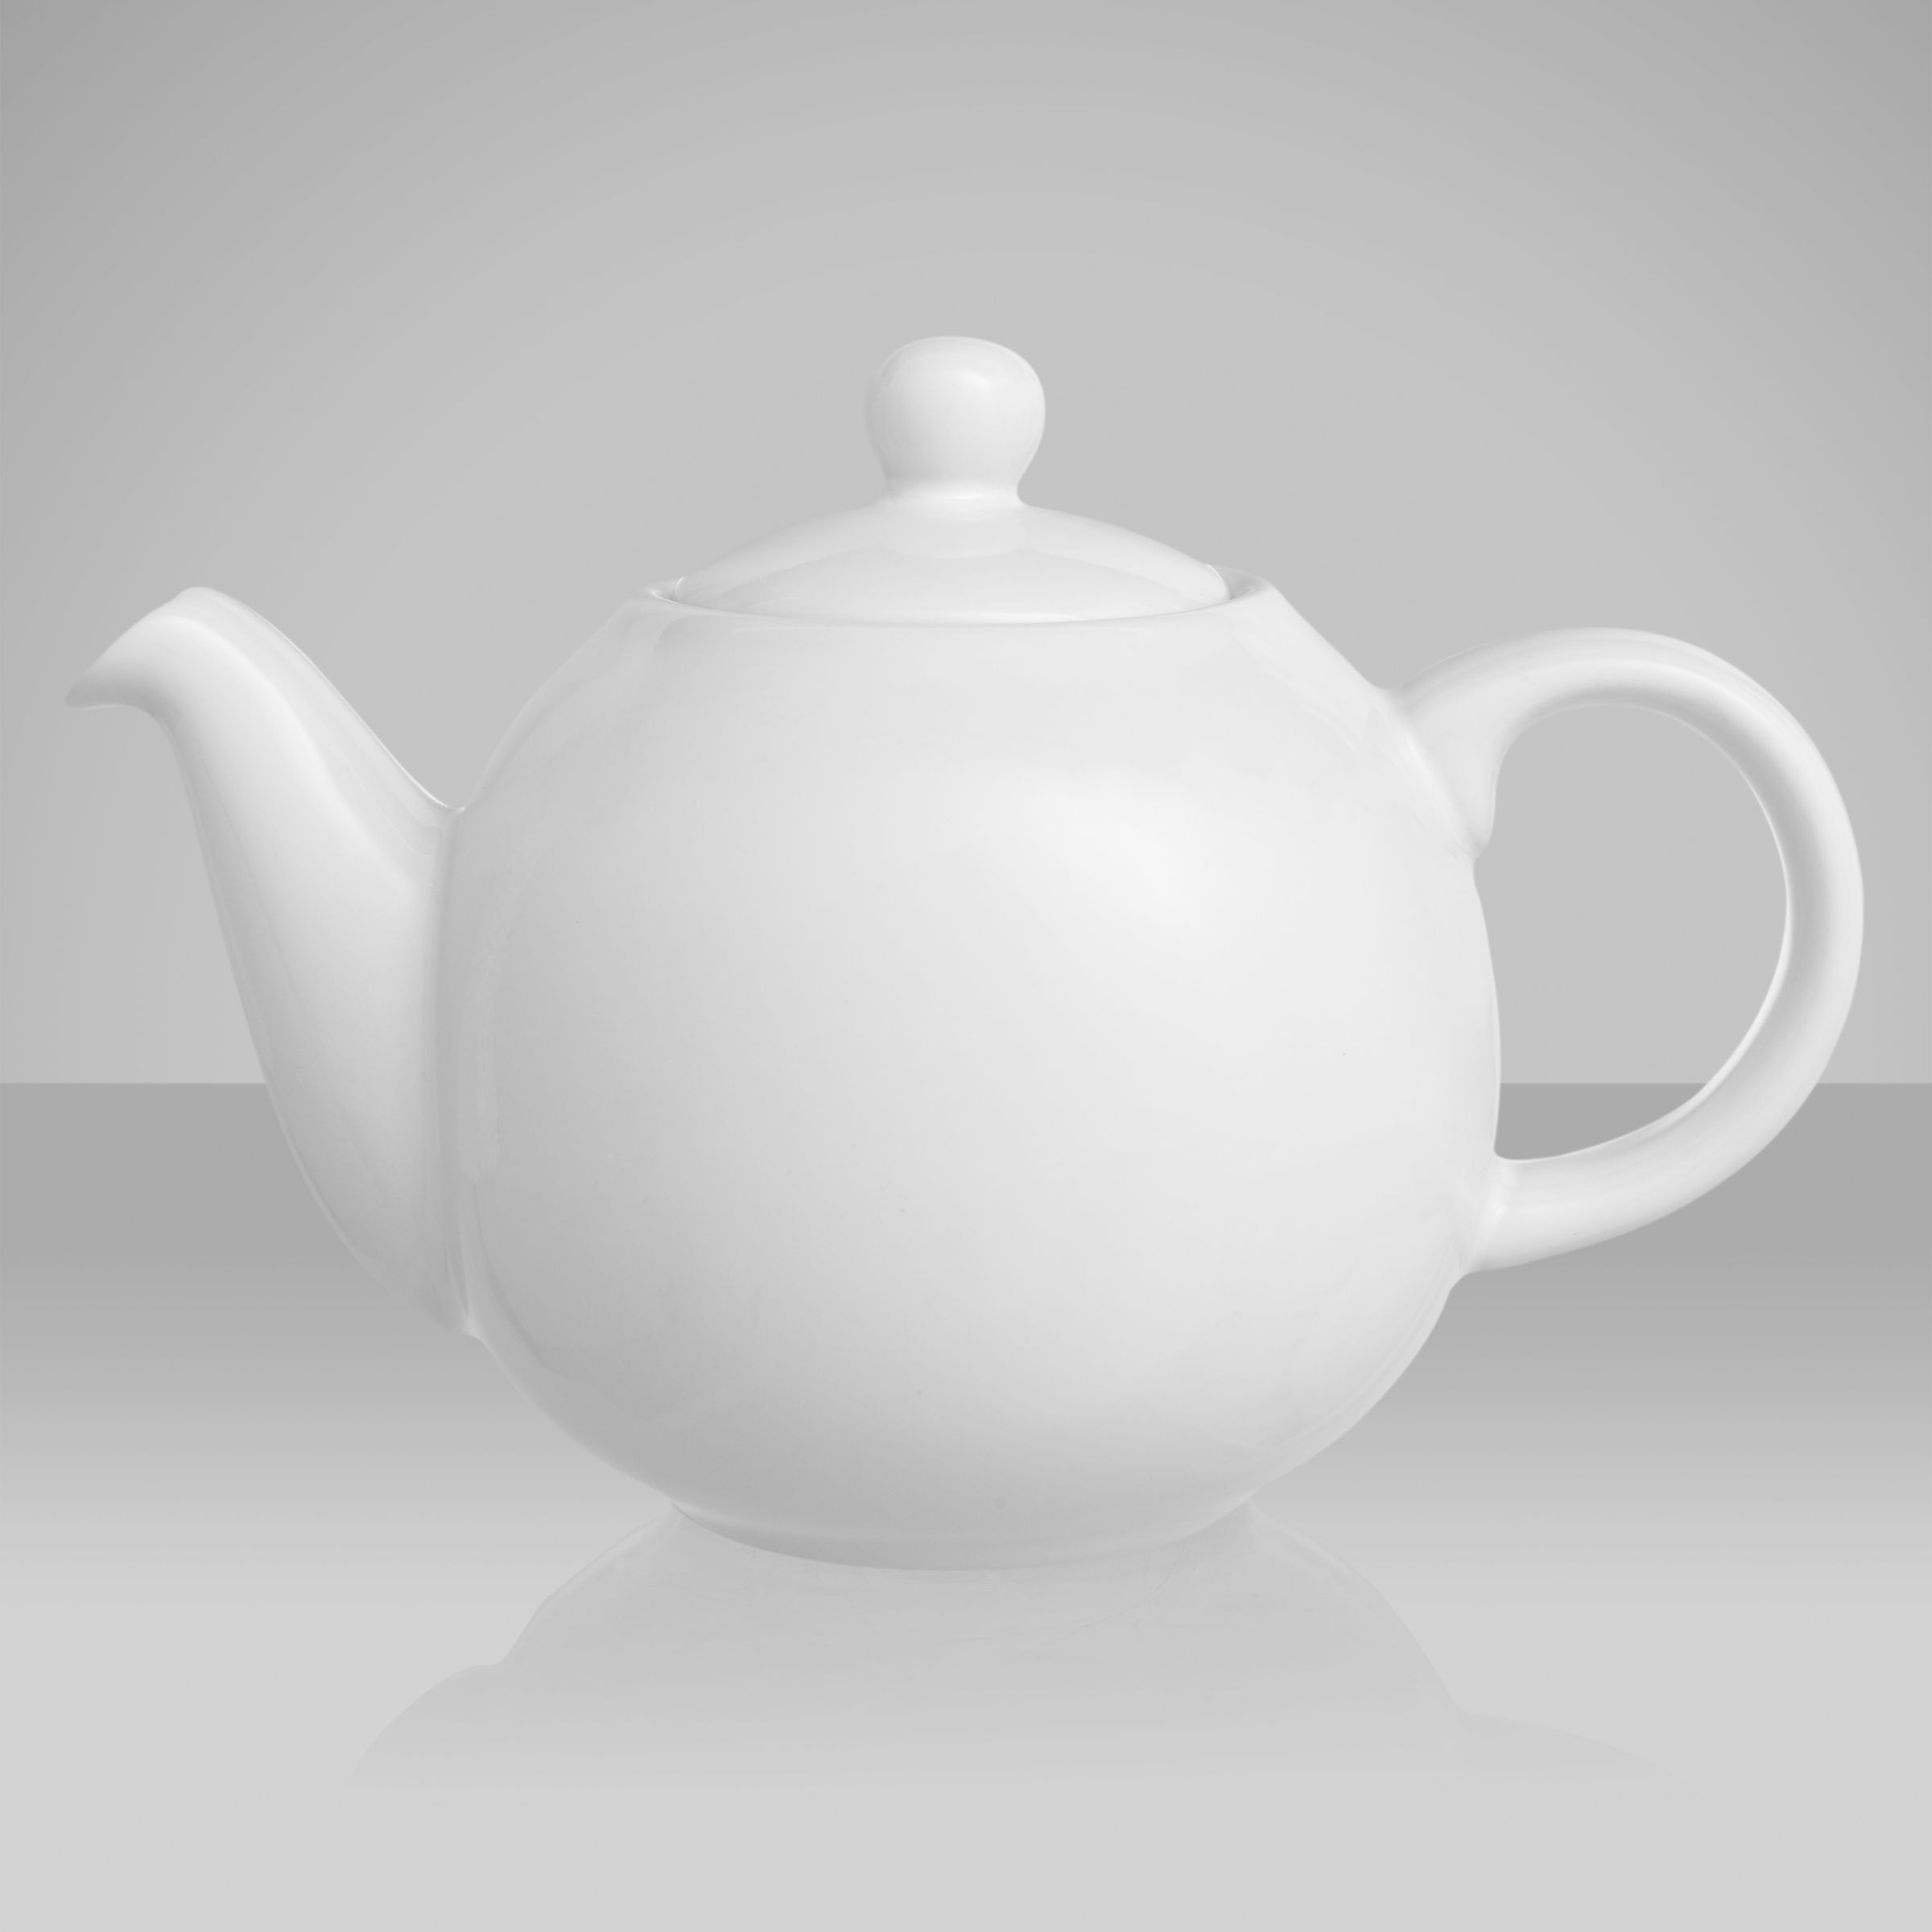 London Pottery Company London Pottery Teapot, 4 Cup 36809